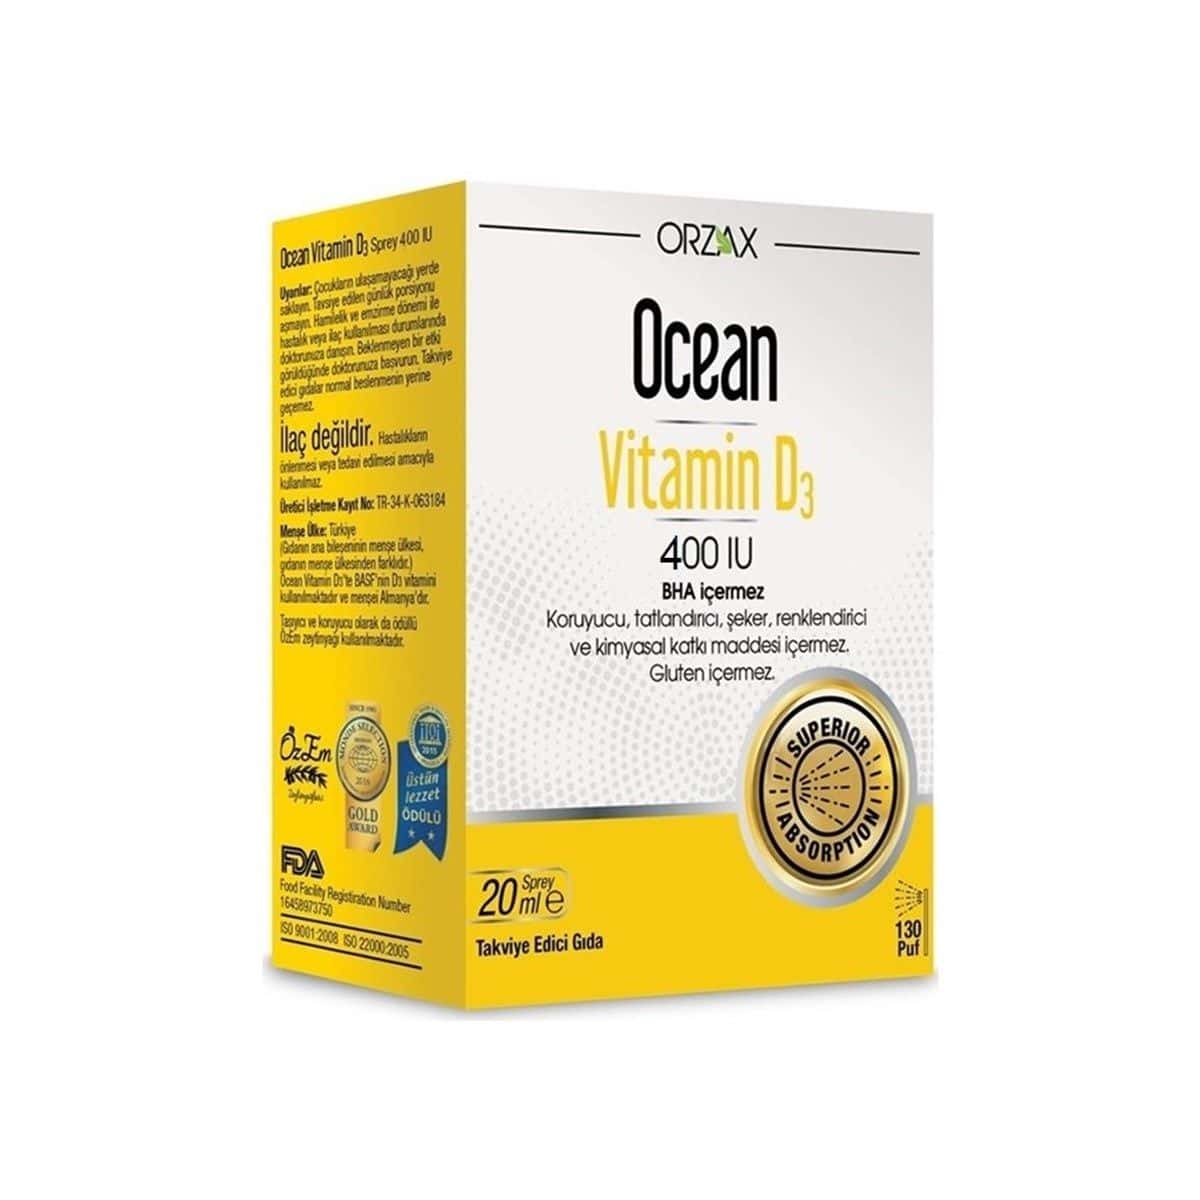 SBA Ocean Vitamin D3 (400UI) spray/puf 20ml